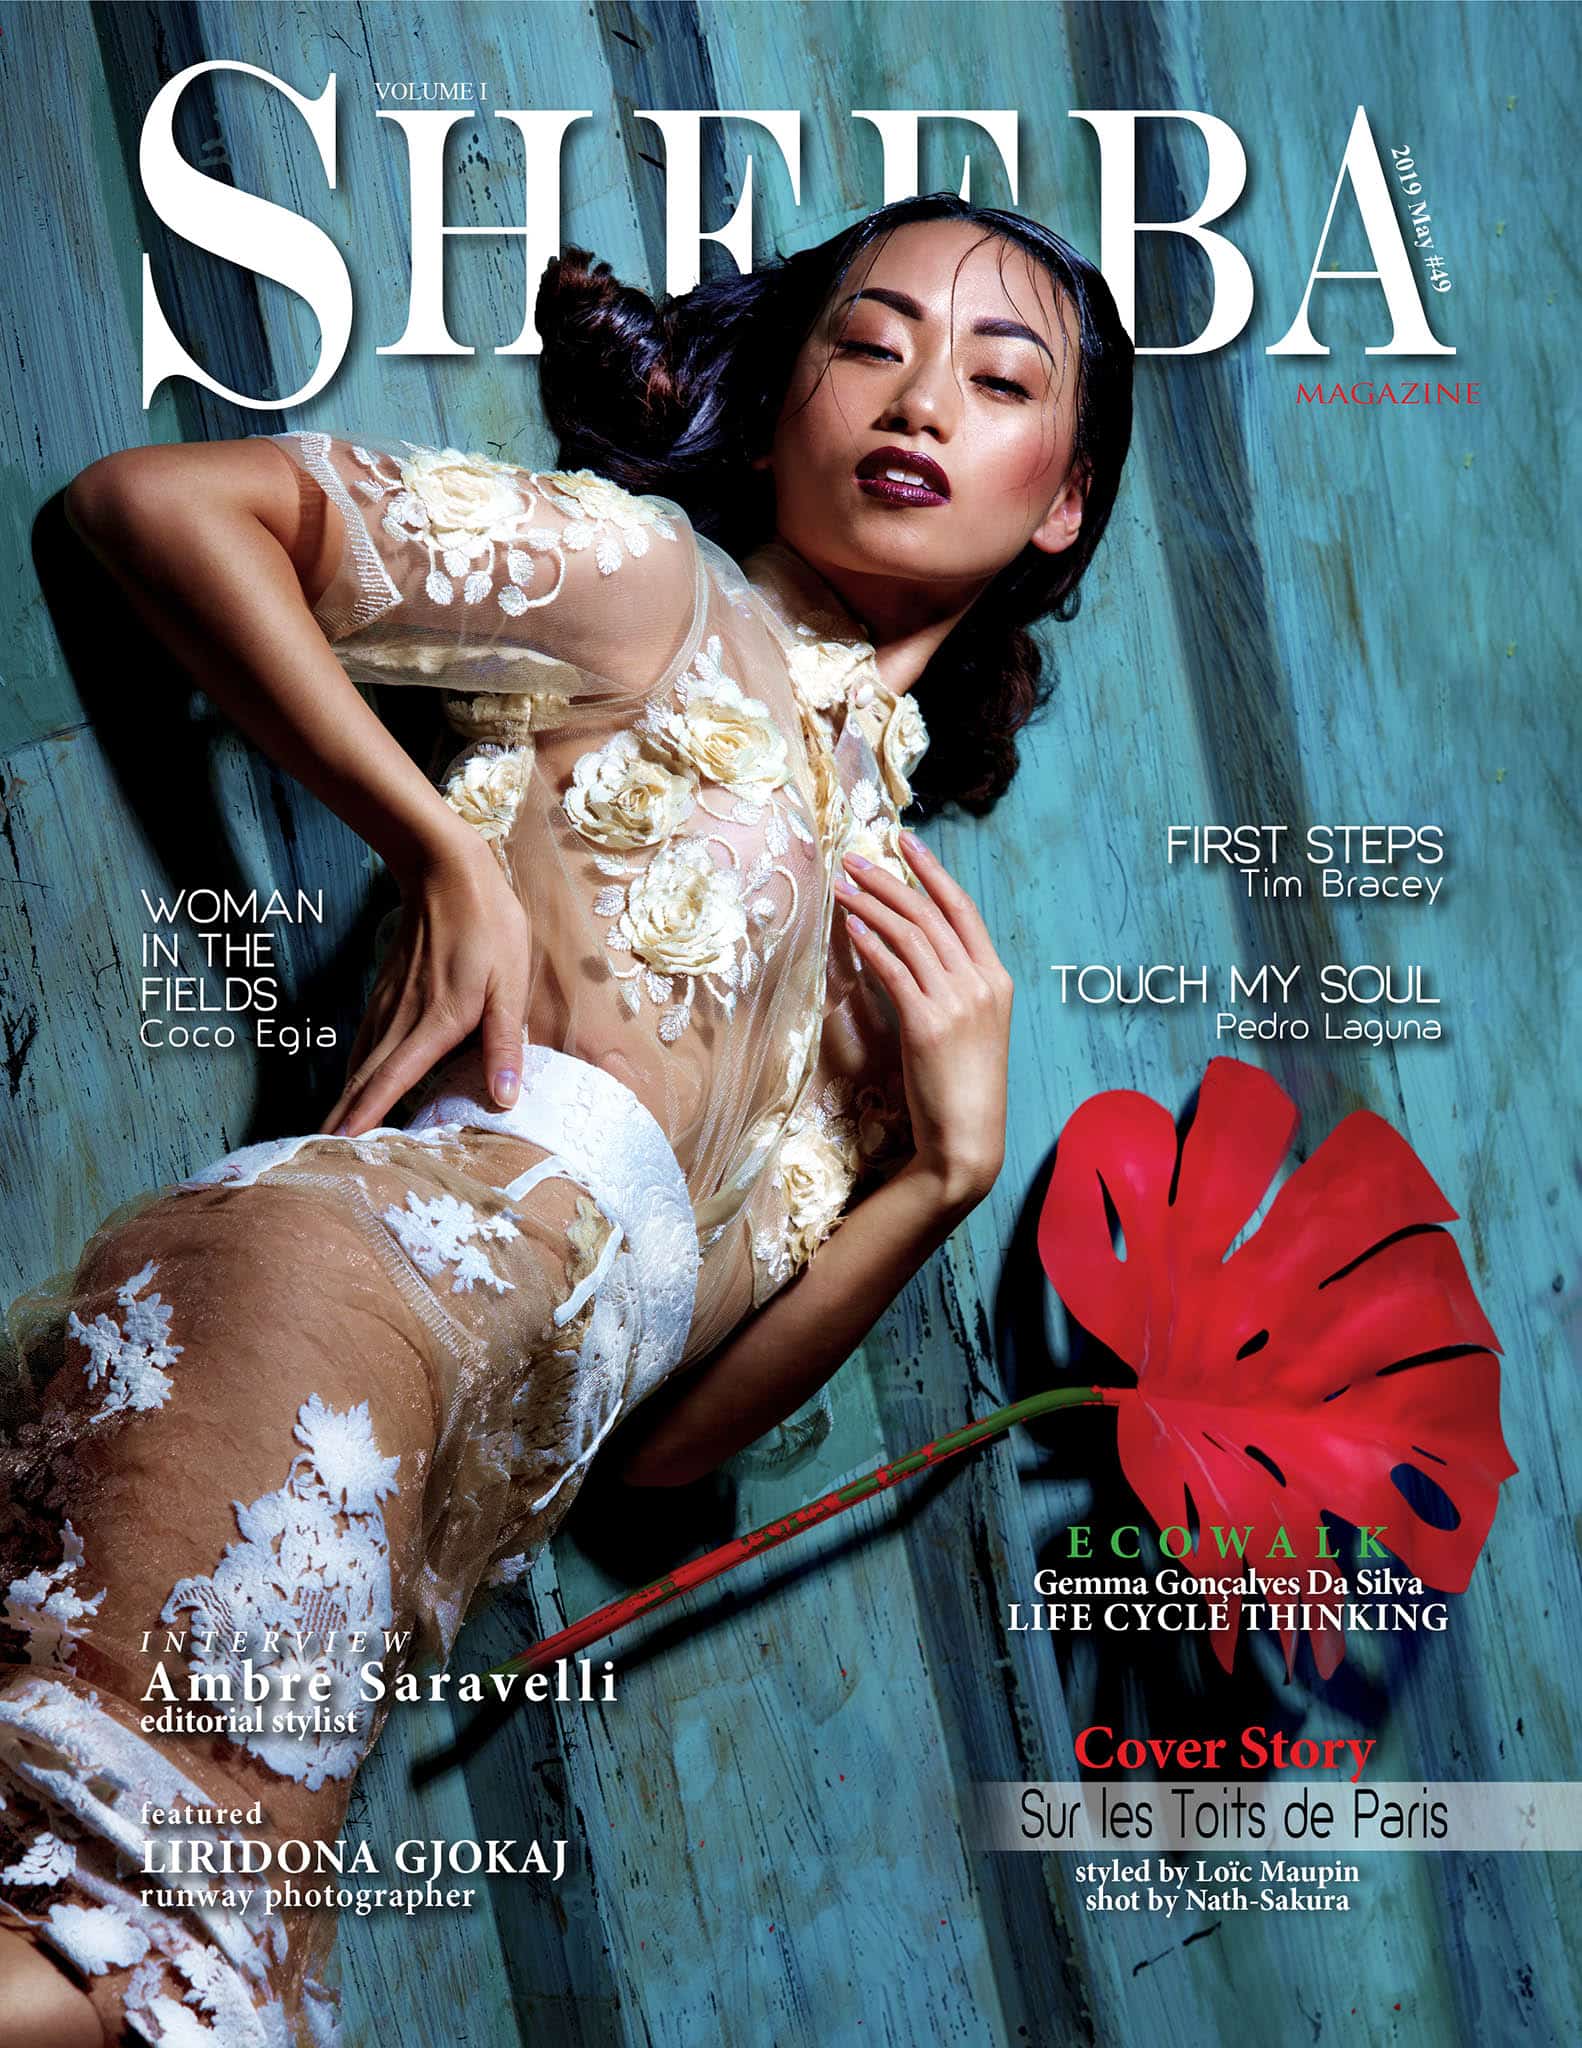 Mode- Couverture magazine Sheeba Photographe © Nath Sakura - Modèle © Marie Wu - Studio © B612 - Magazine © Sheeba